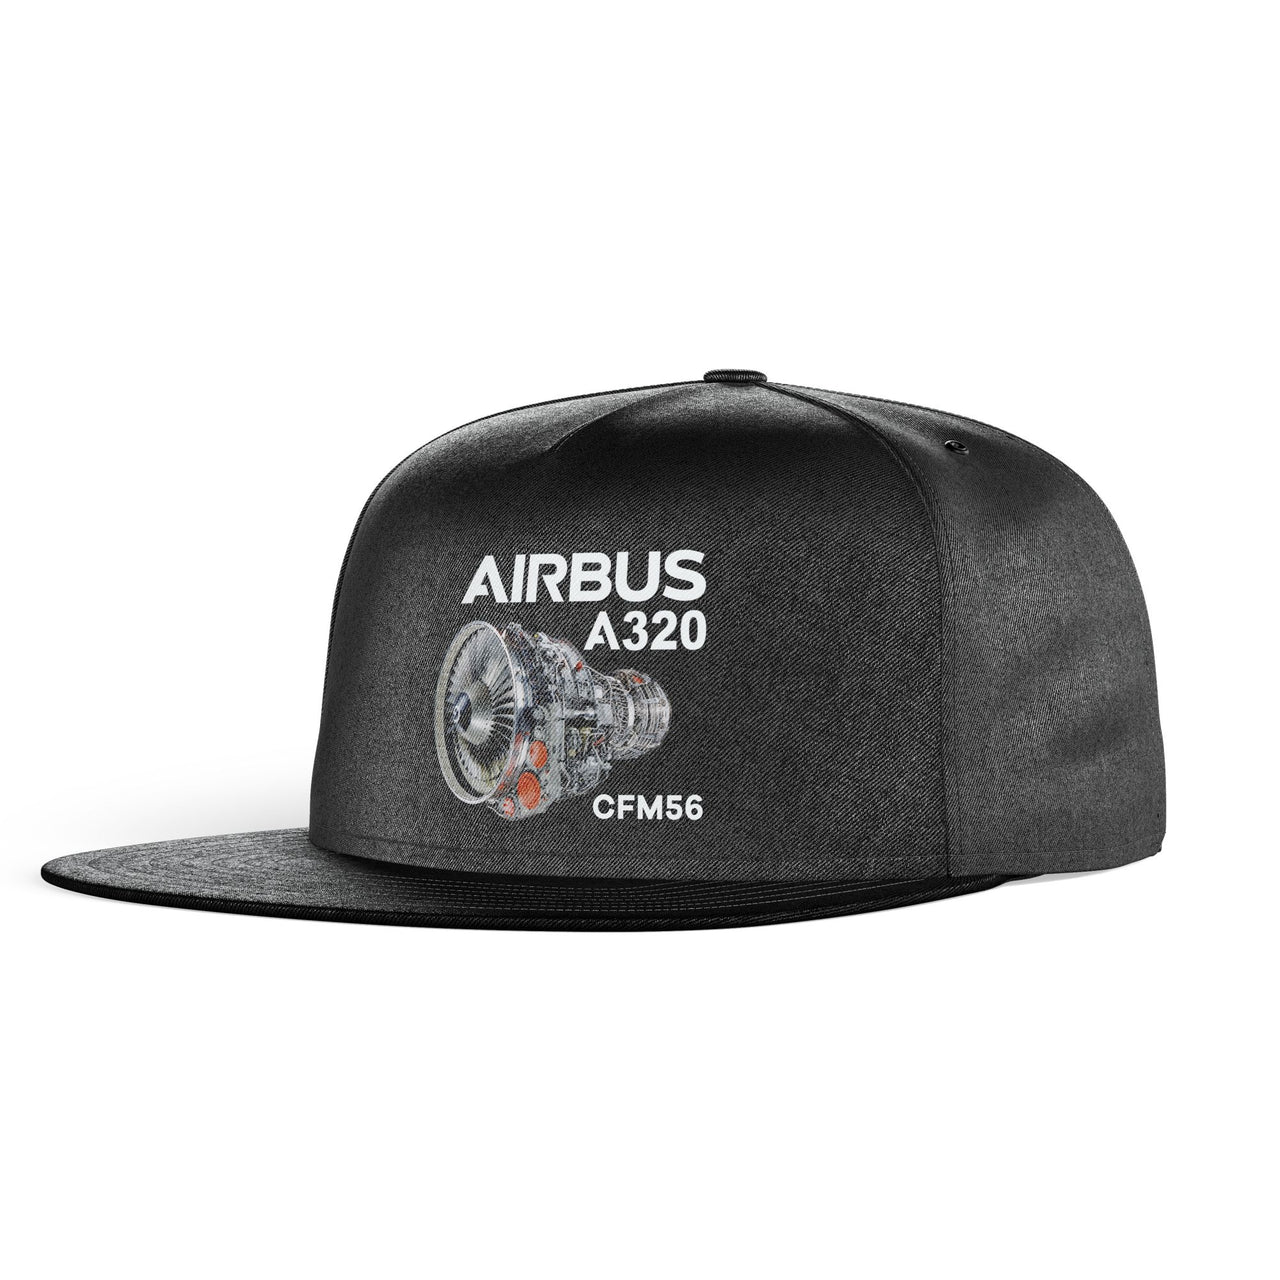 Airbus A320 & CFM56 Engine Designed Snapback Caps & Hats